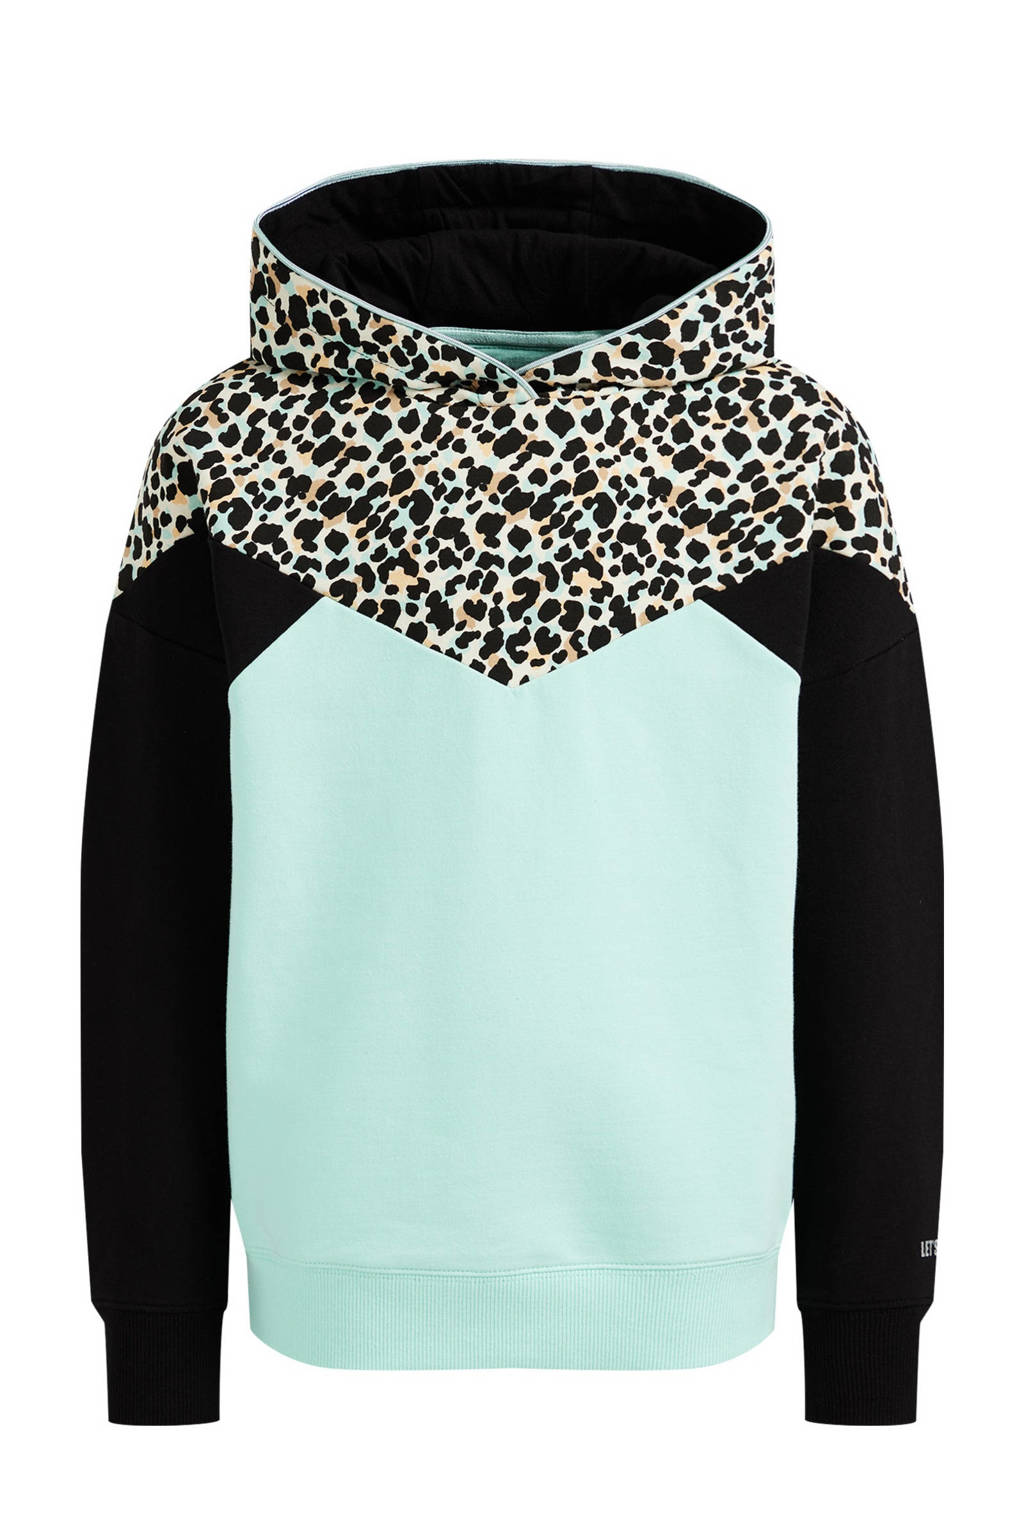 Mintgroen, wit en zwarte meisjes WE Fashion hoodie van stretchkatoen met dierenprint, lange mouwen en capuchon